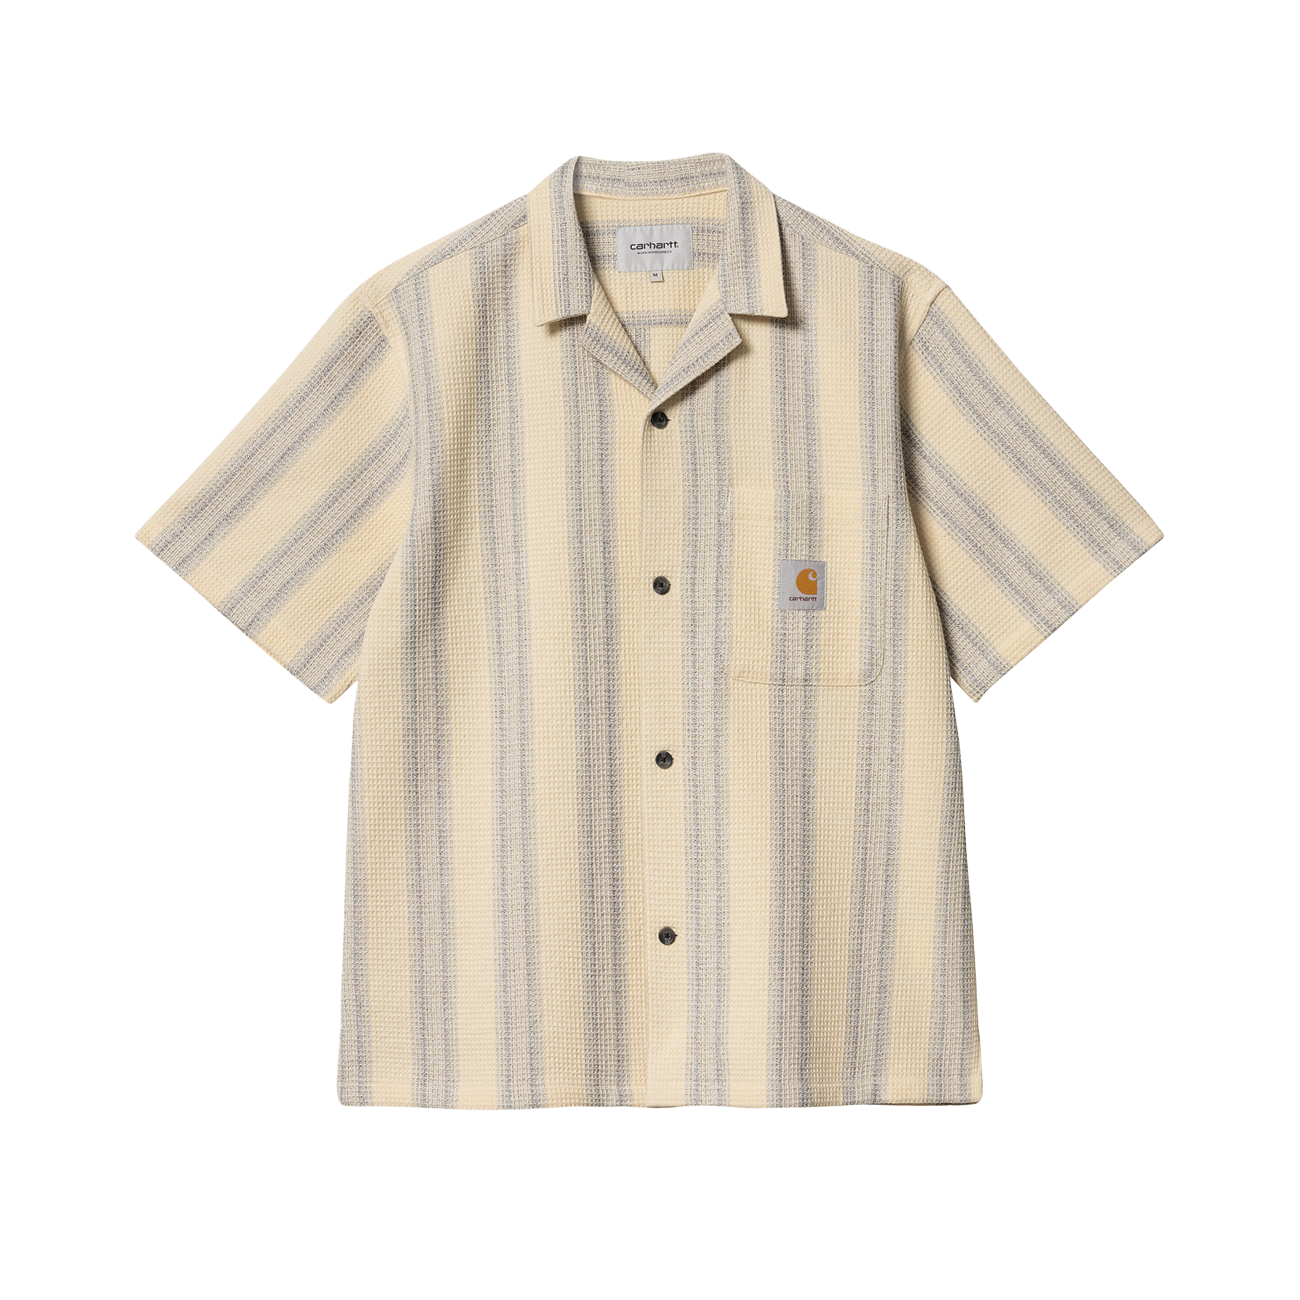 Carhartt WIP S/S Dodson Shirt (Beige)  - Allike Store